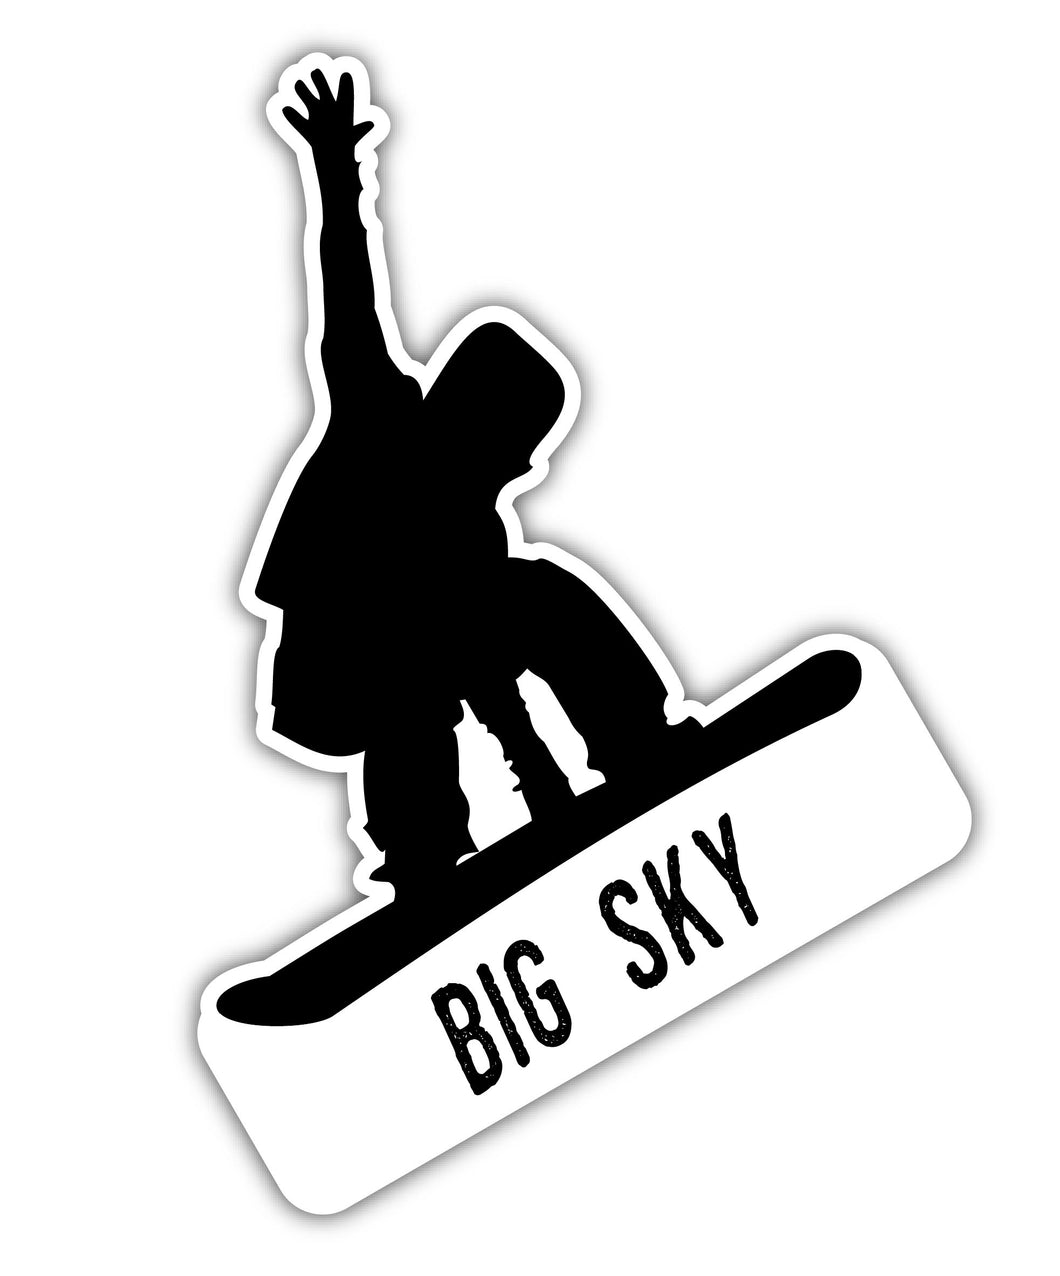 Big Sky Montana Ski Adventures Souvenir Approximately 5 x 2.5-Inch Vinyl Decal Sticker Goggle Design